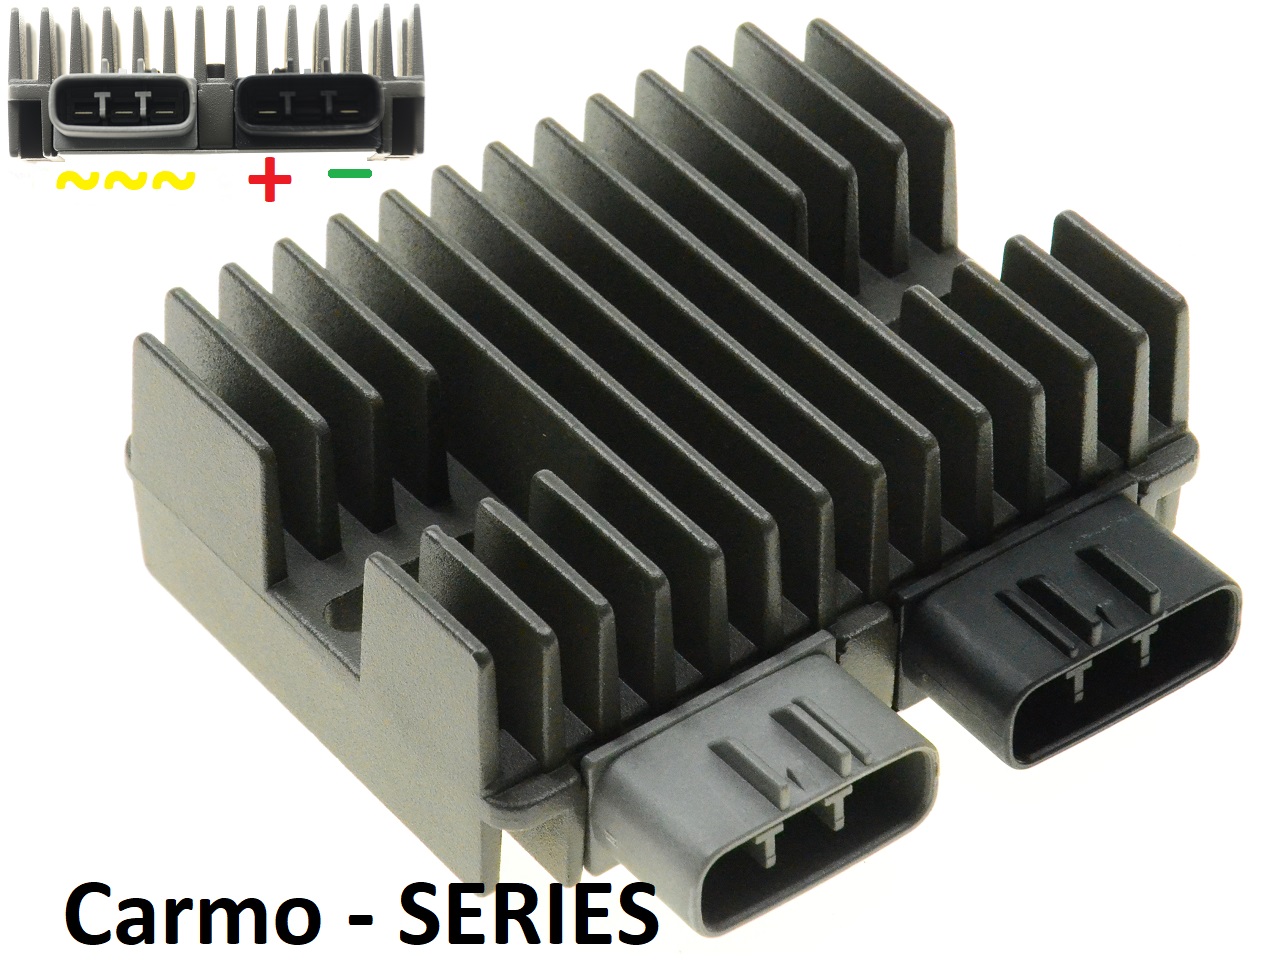 CARR5925-SERIE - MOSFET SERIE SERIES Rectificador de regulador de voltaje (Mejorado SH847) me gusta compu-fire